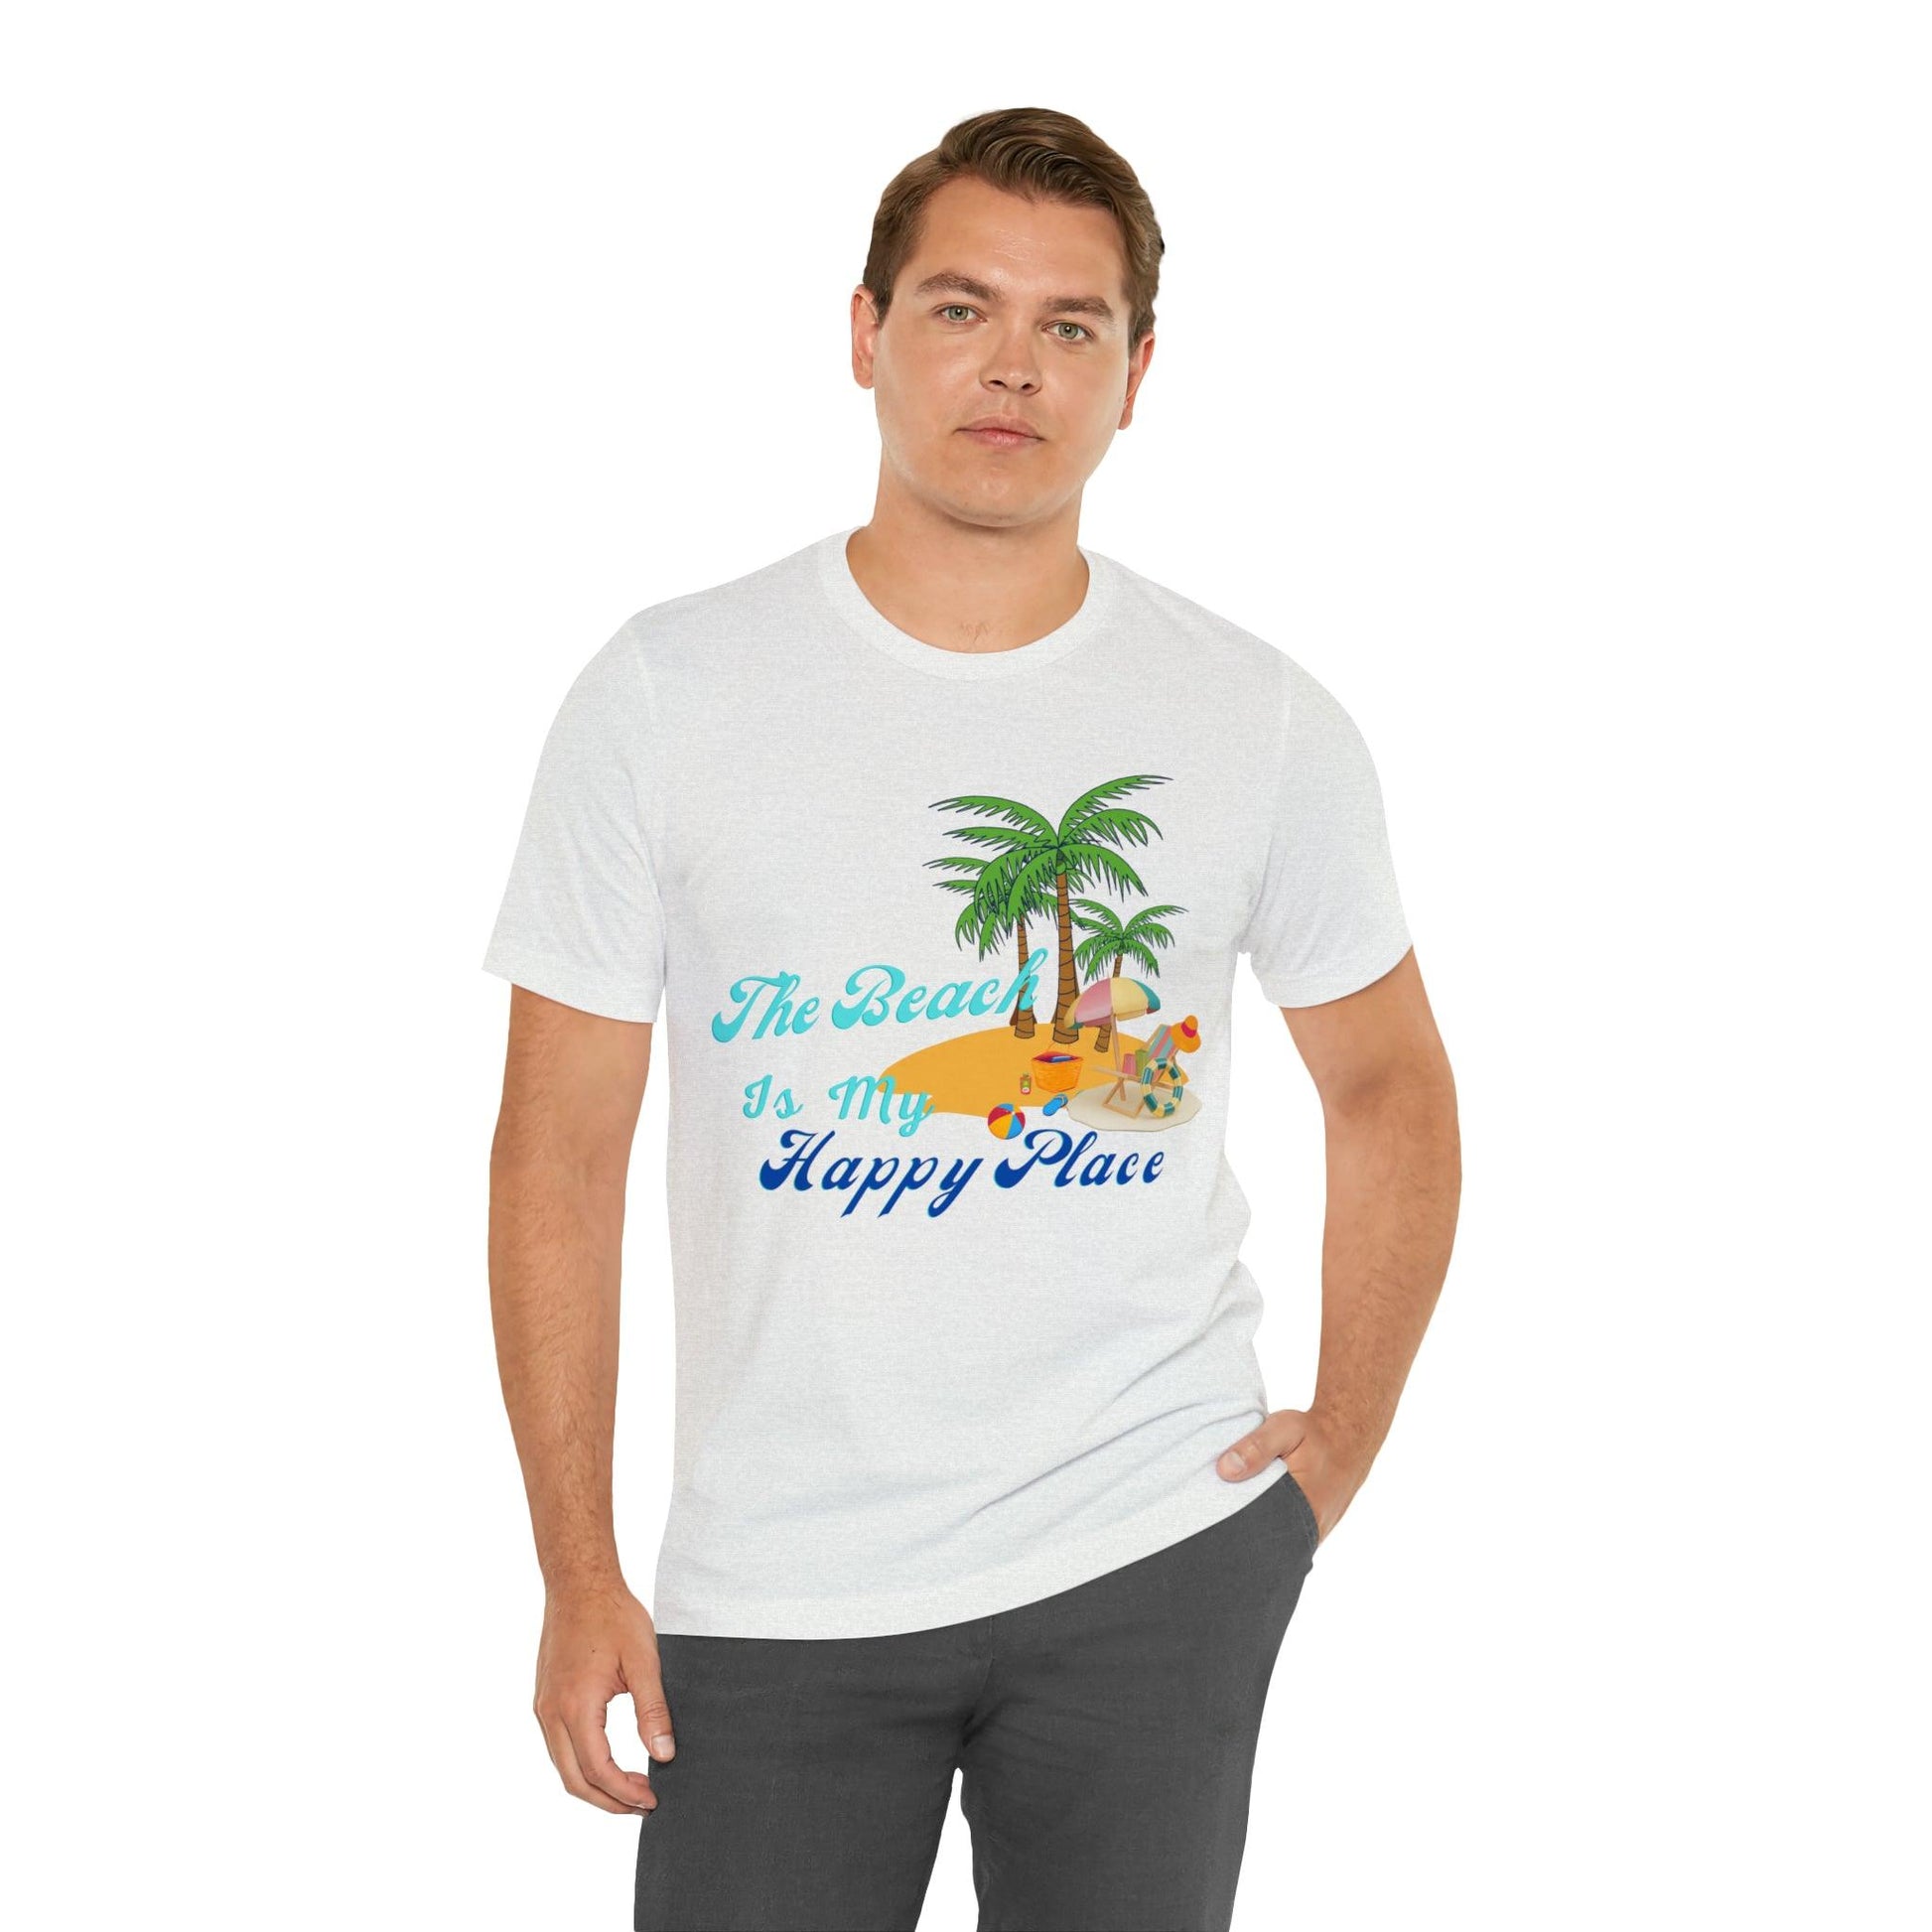 Beach shirt, The Beach is my happy place shirt, Beach t-shirt, Summer shirt, Beachwear, Beach fashion, Stylish beach apparel - Giftsmojo